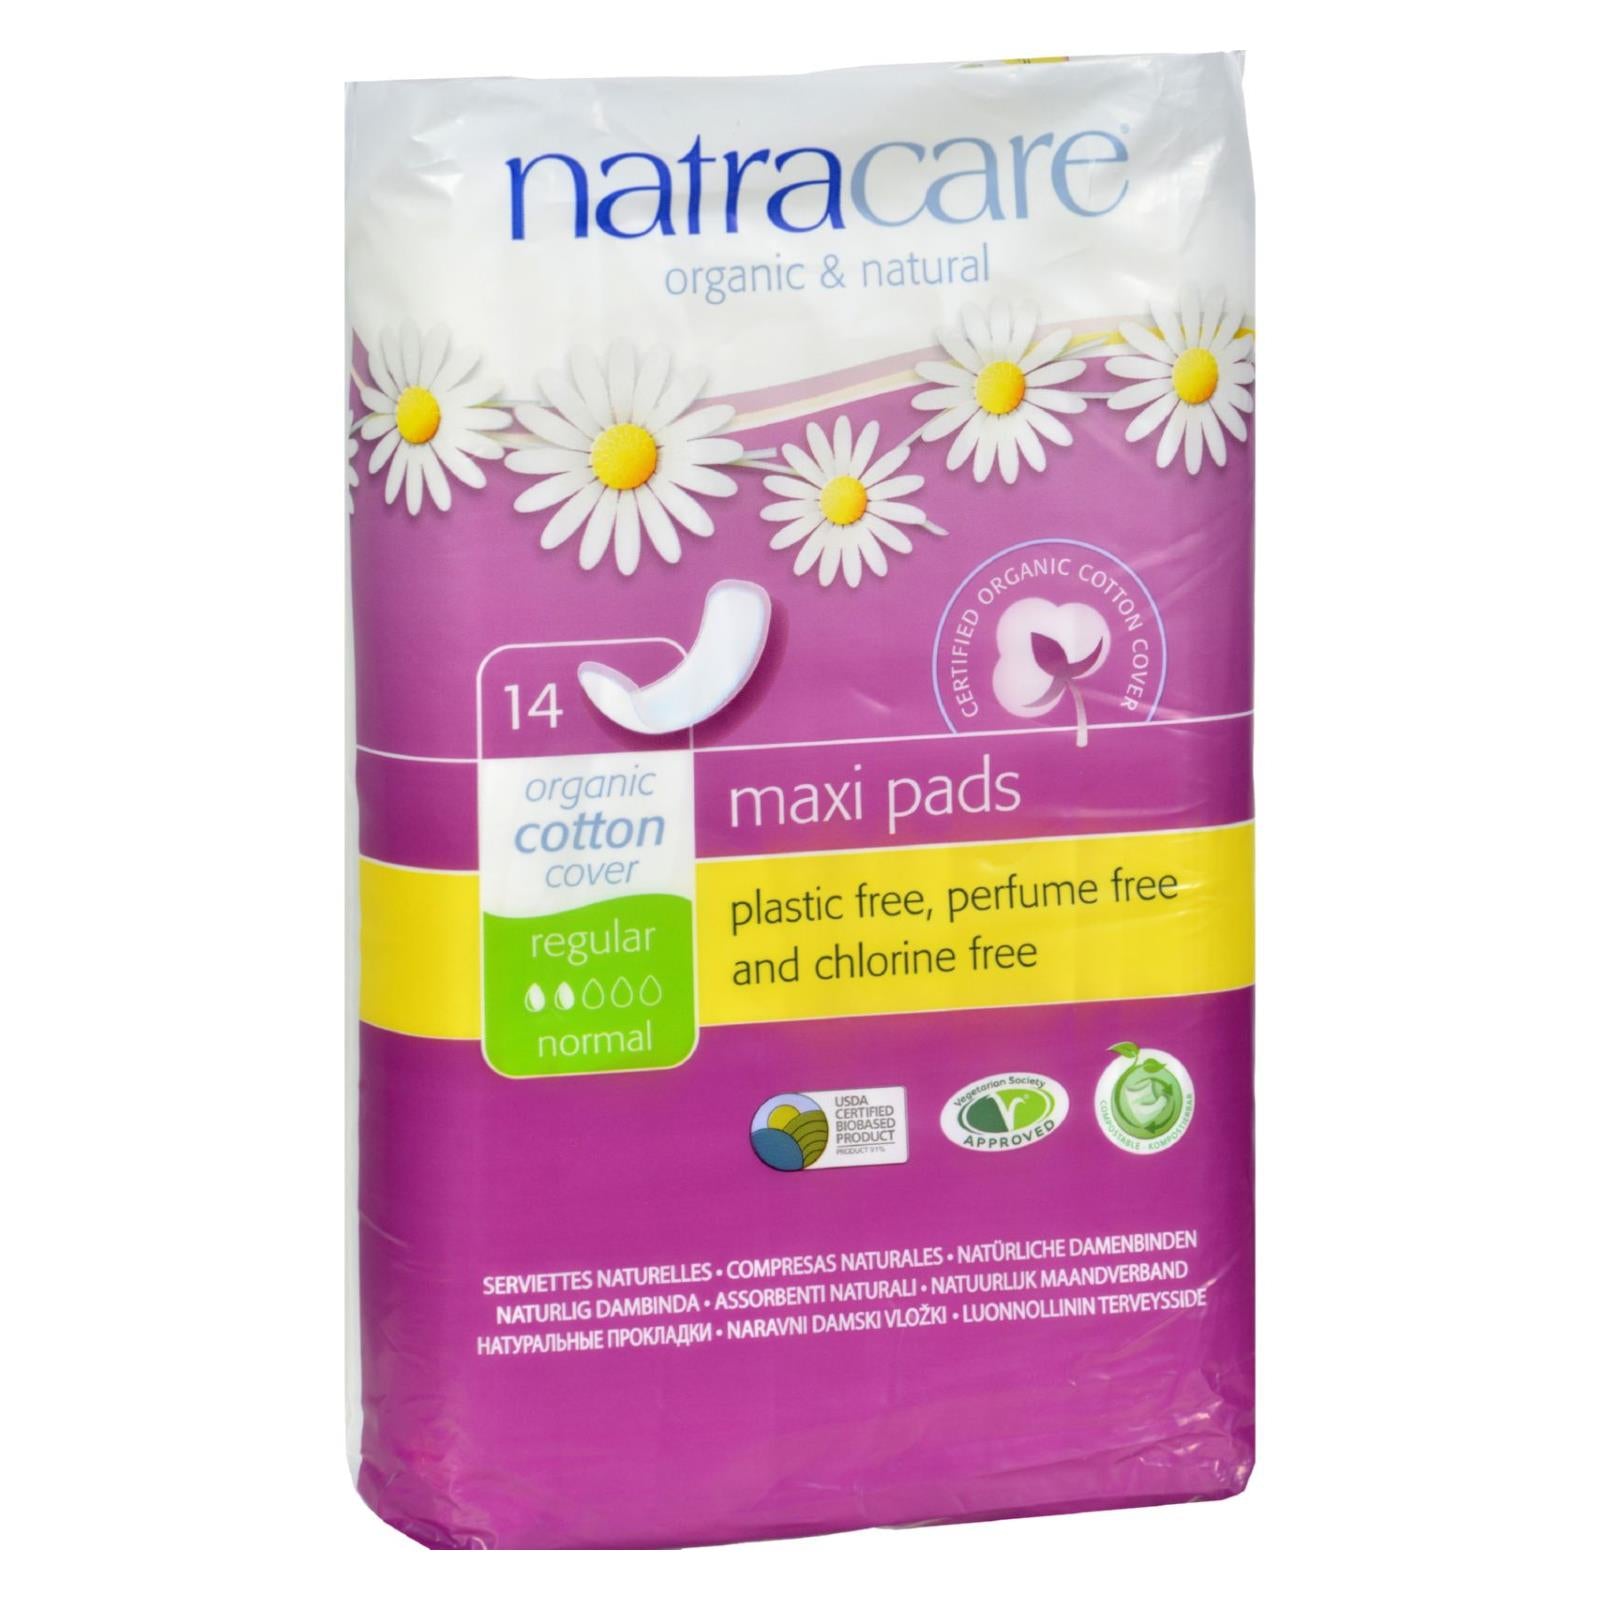 Natracare Natural Maxi Pads Regular - 14 Pack